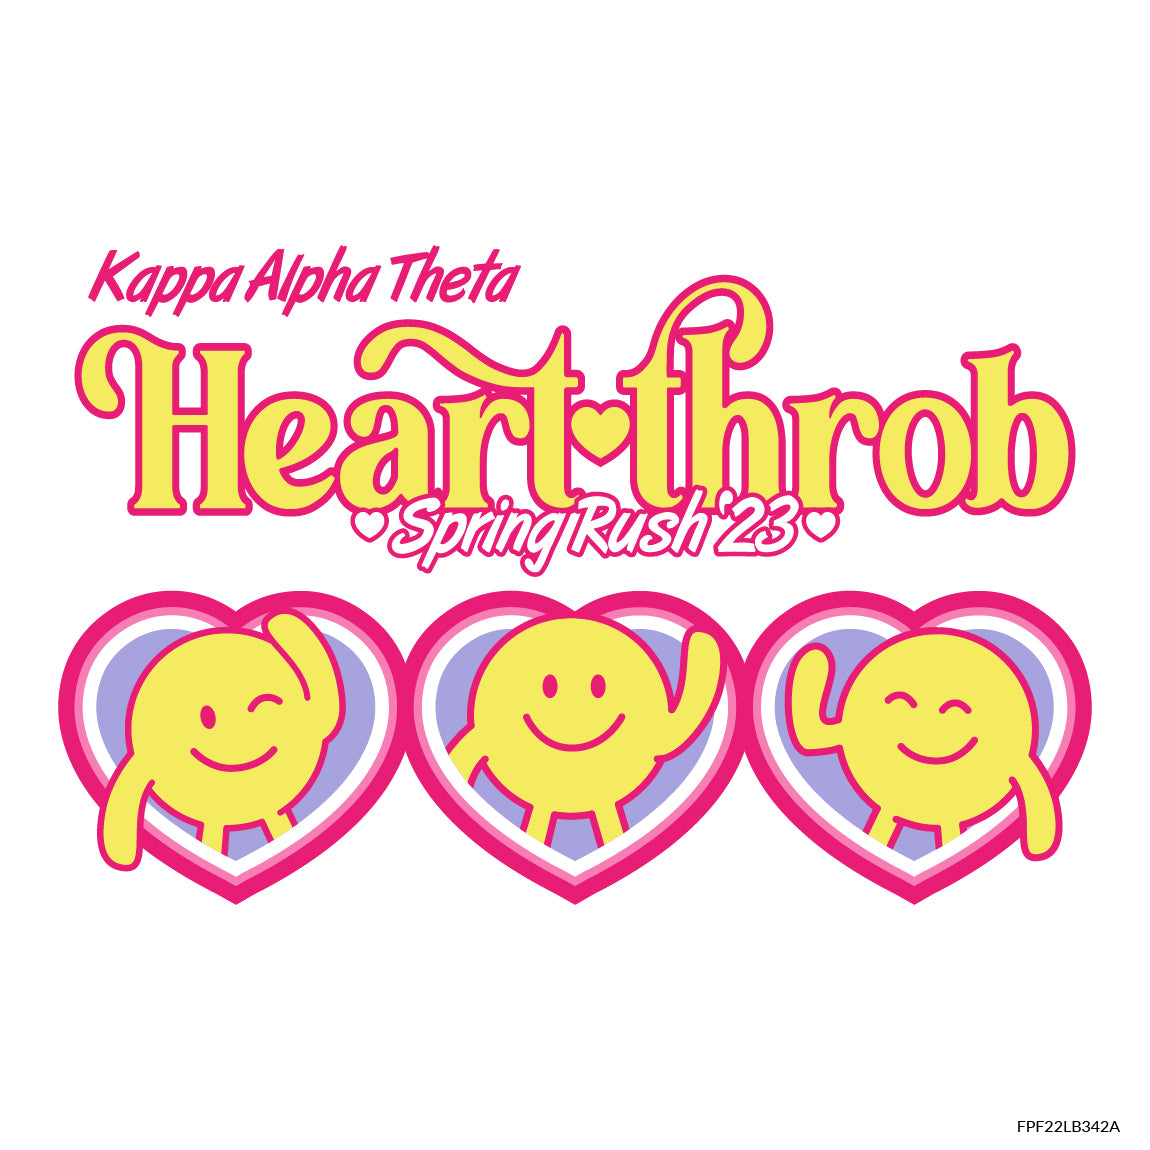 Heart-throb